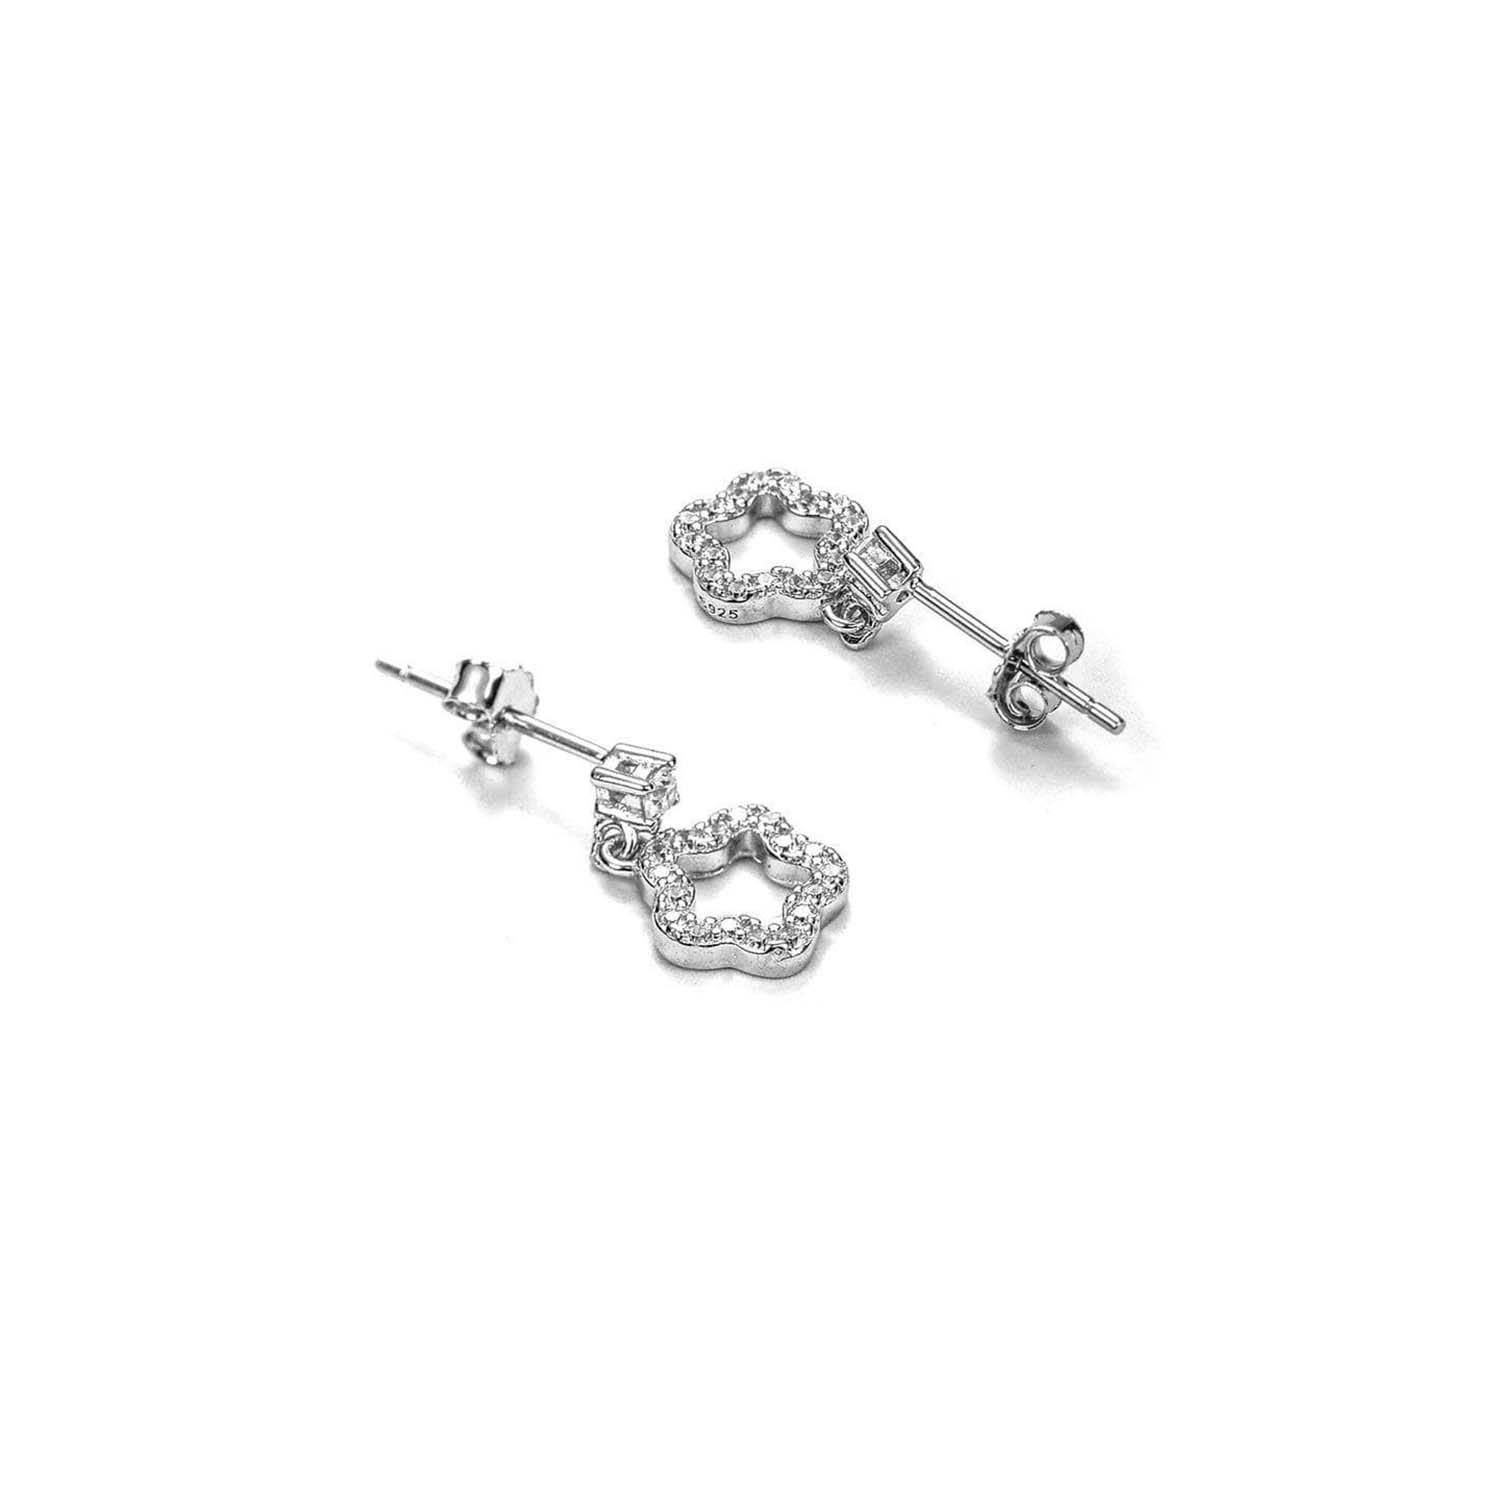 CZ Studded Sparkling 925 Silver Earrings Set